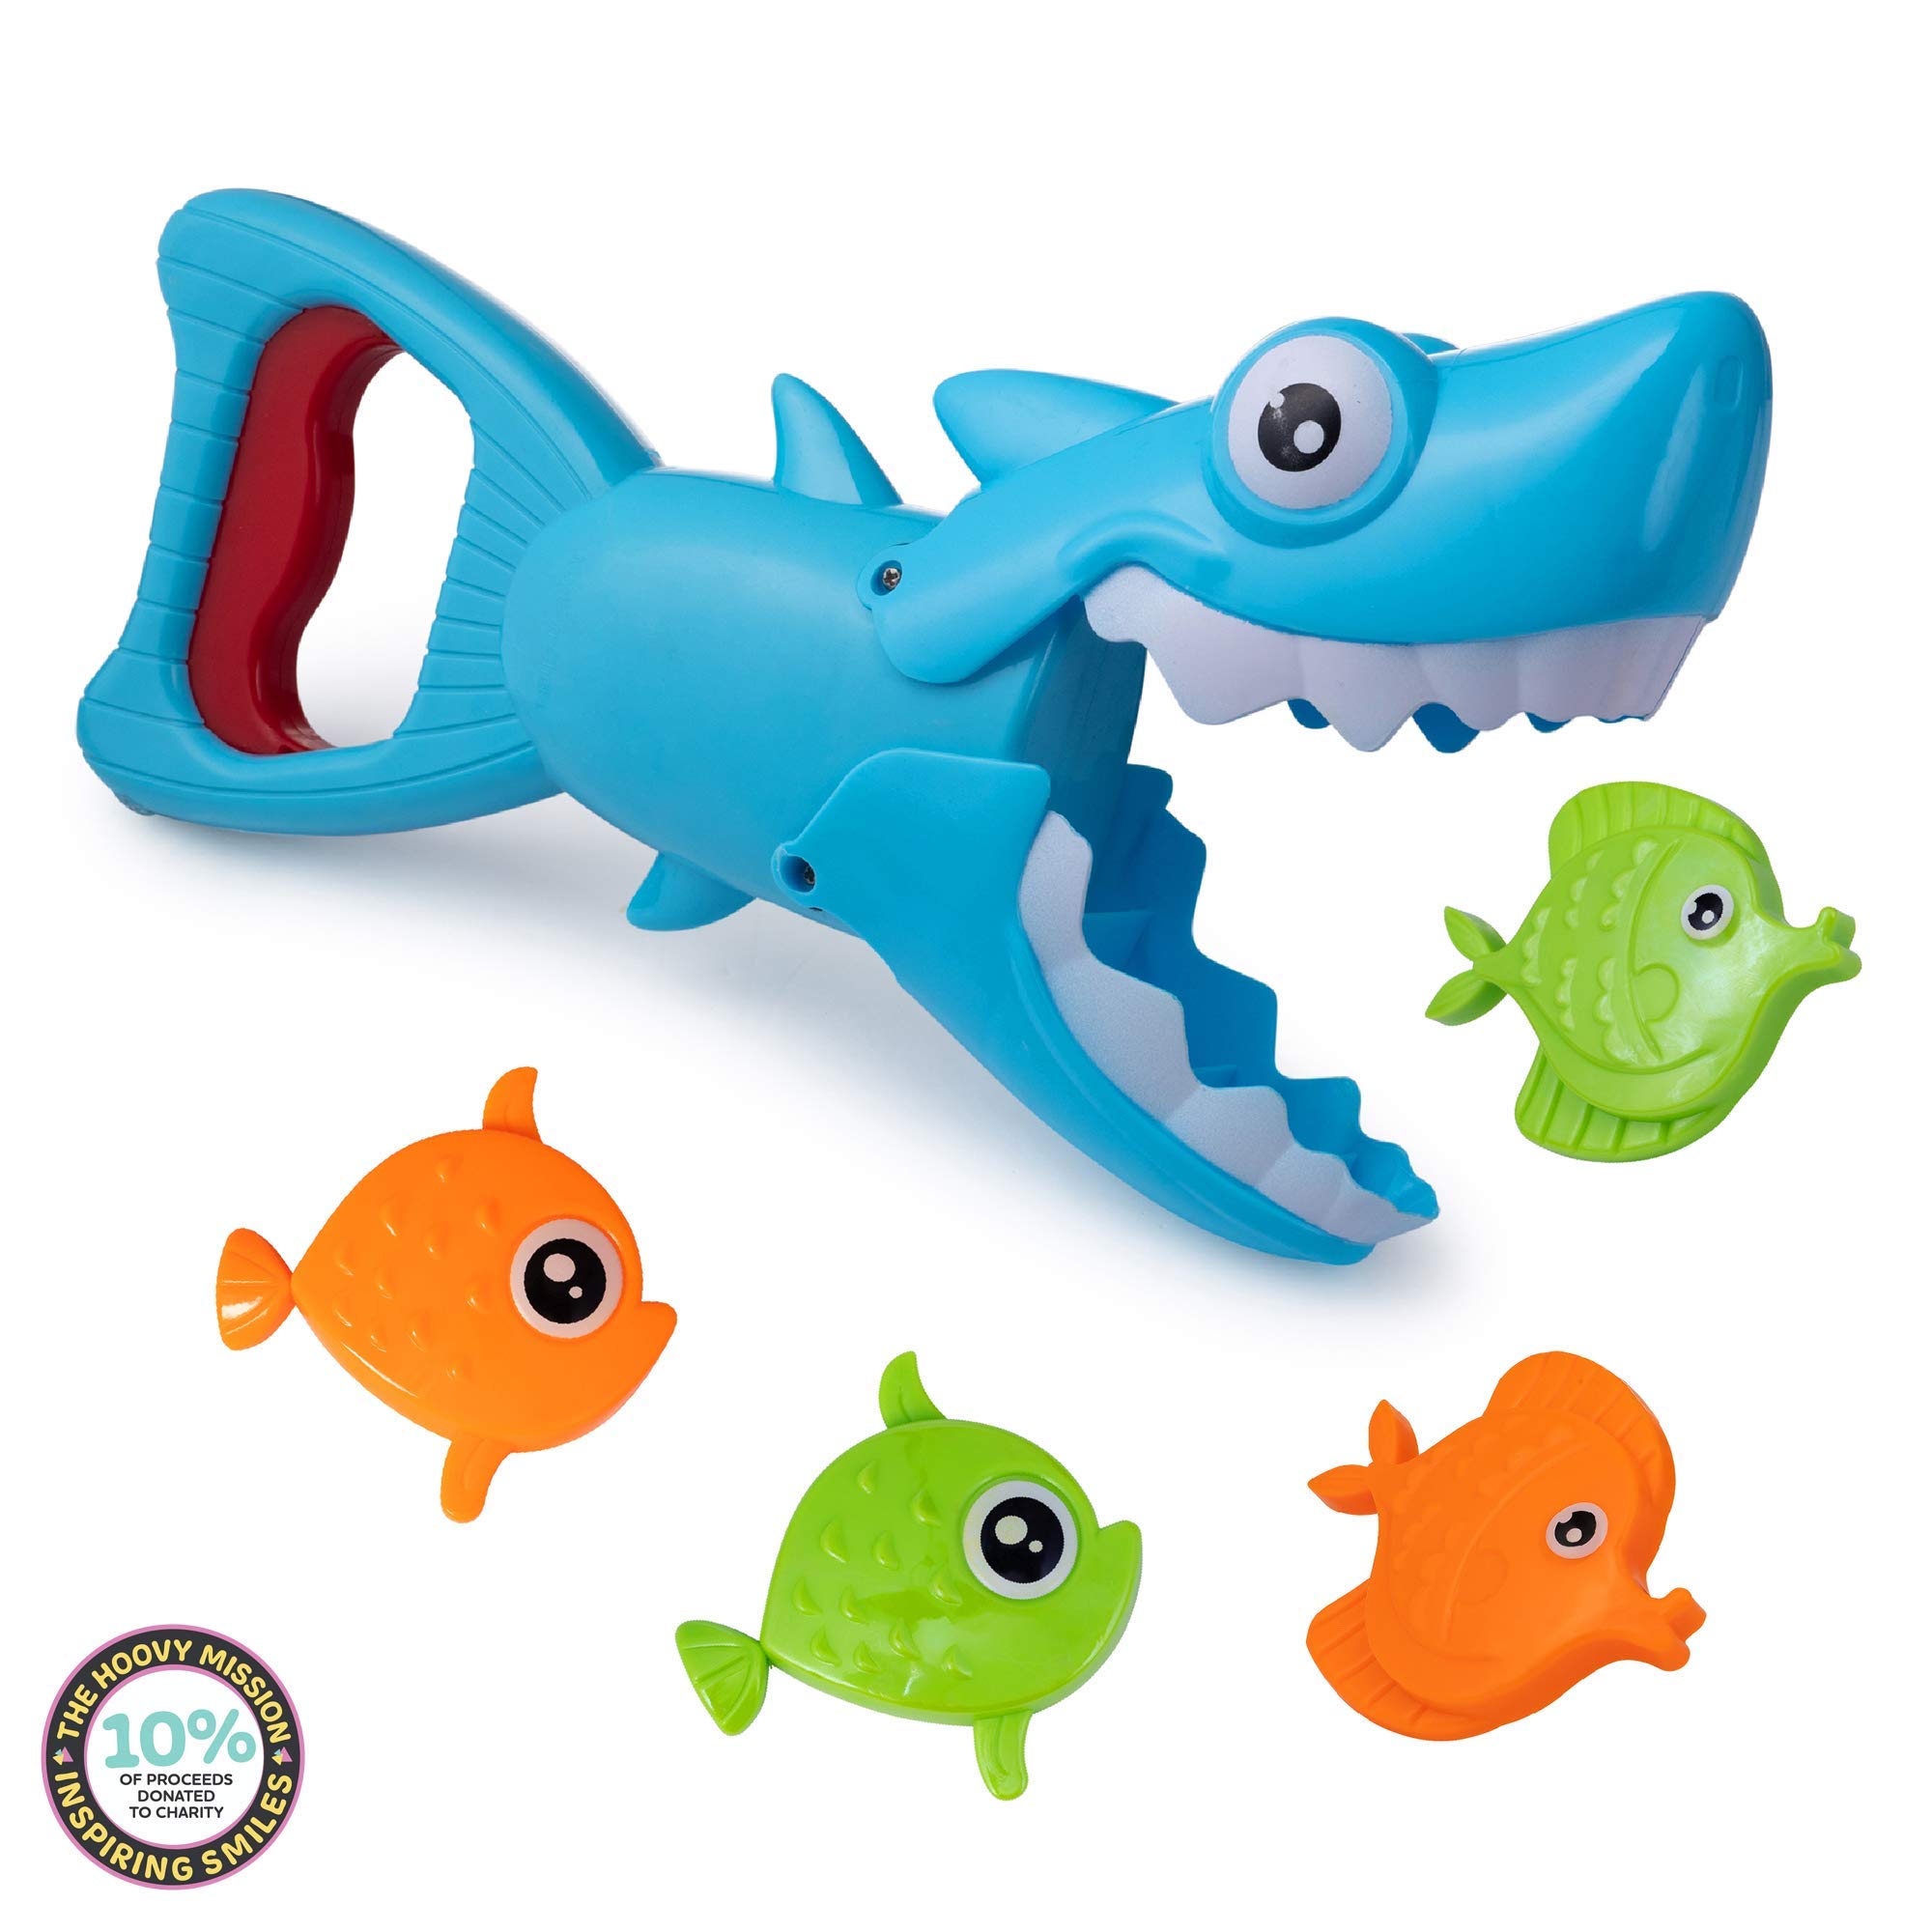 Hoovy Bath Toys Fun Baby Bathtub Toy Shark Bath Toy for Toddlers Boys & Girls Shark Grabber with 4 Toy Fish Included (Shark Hoop & Fri